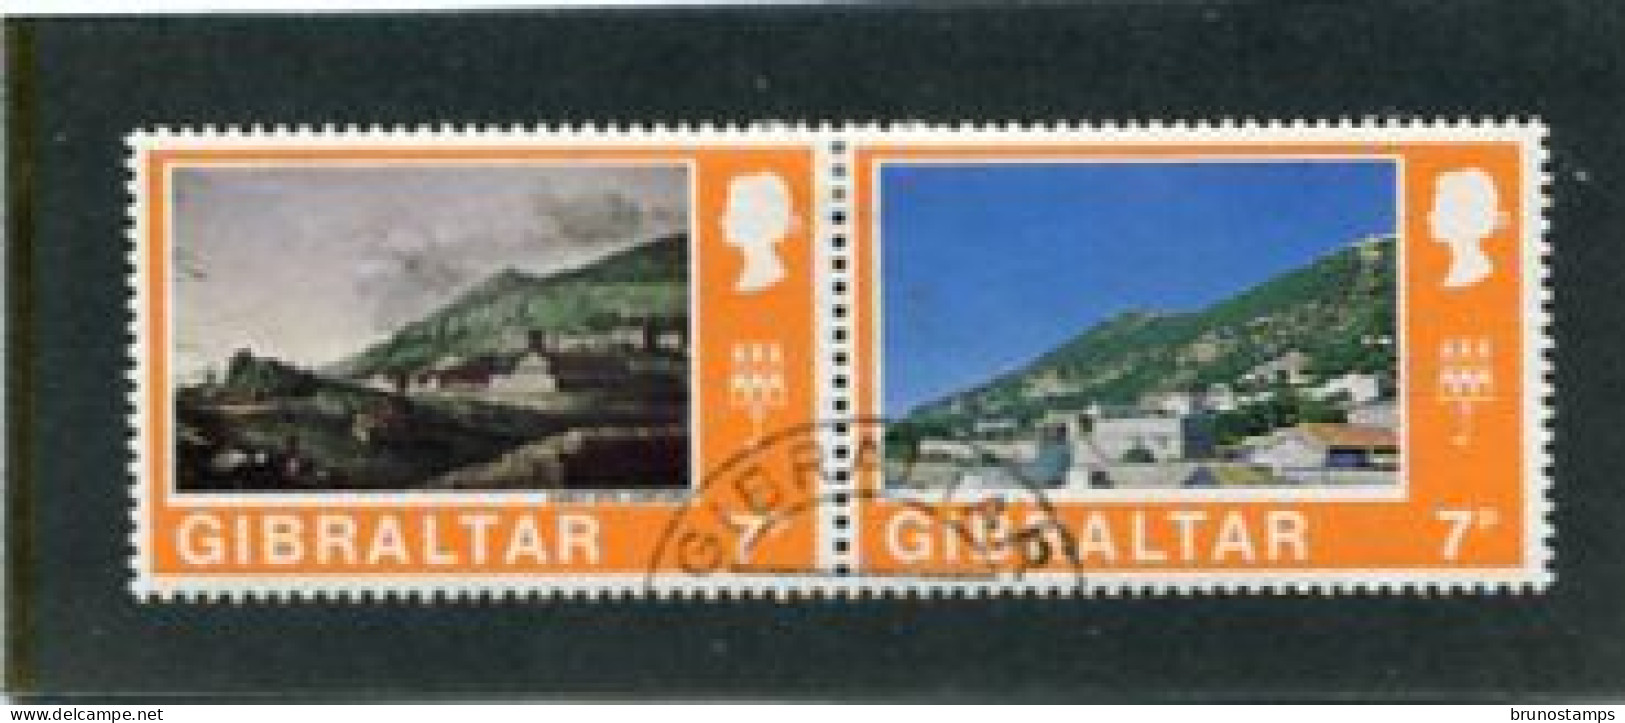 GIBRALTAR - 1971  7p  DEFINITIVE PAIR  FINE USED - Gibraltar